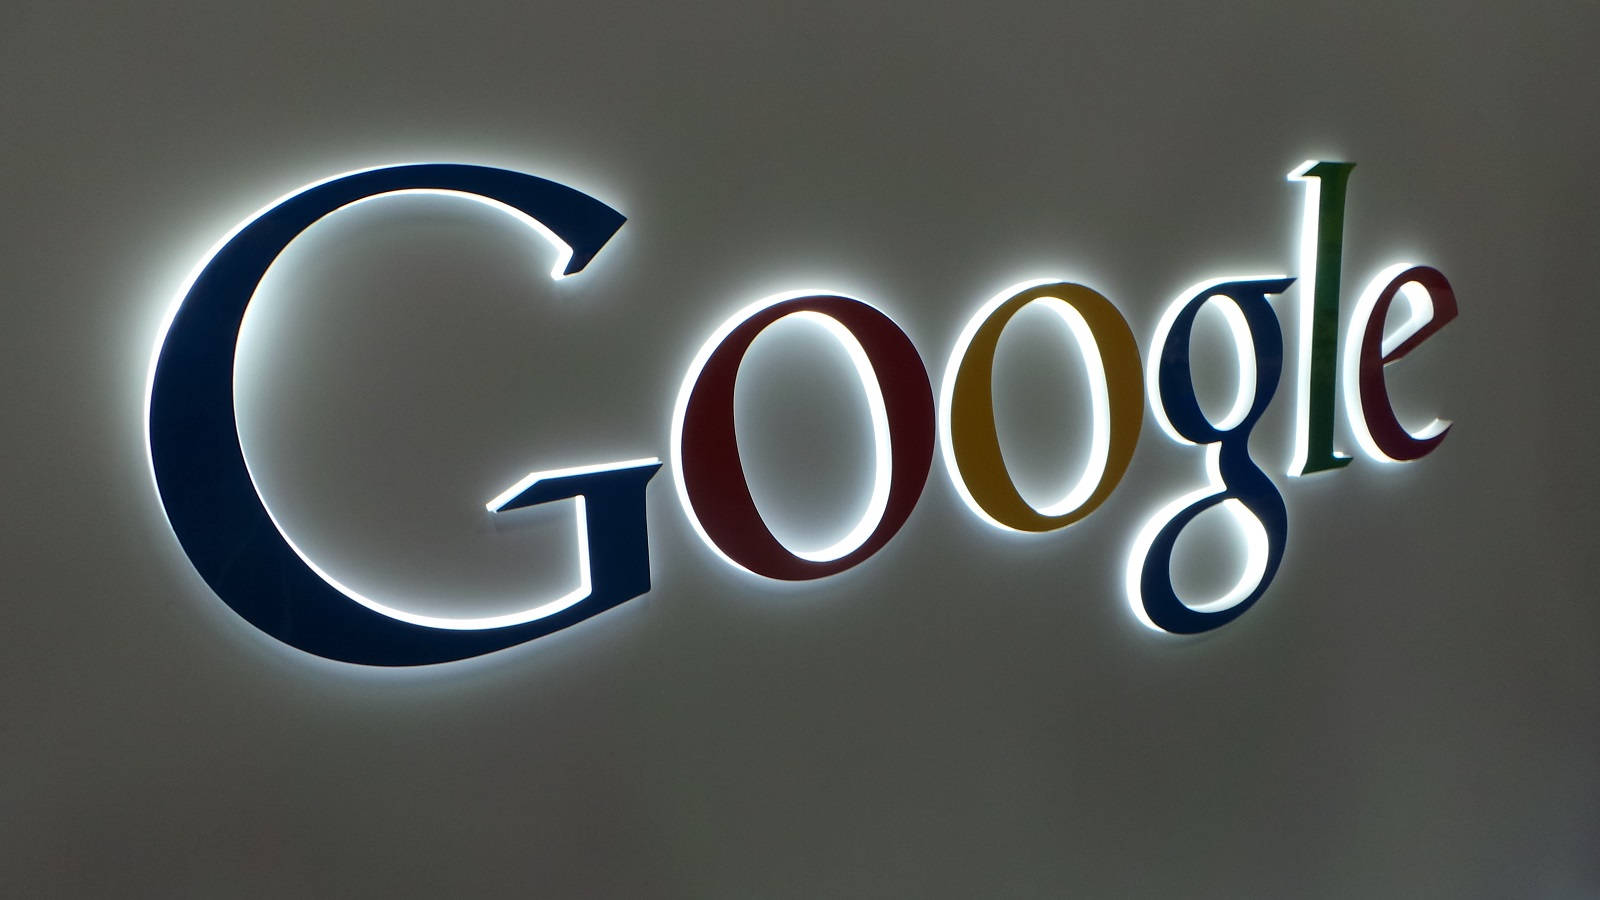 Glowing Google Logo Wallpaper